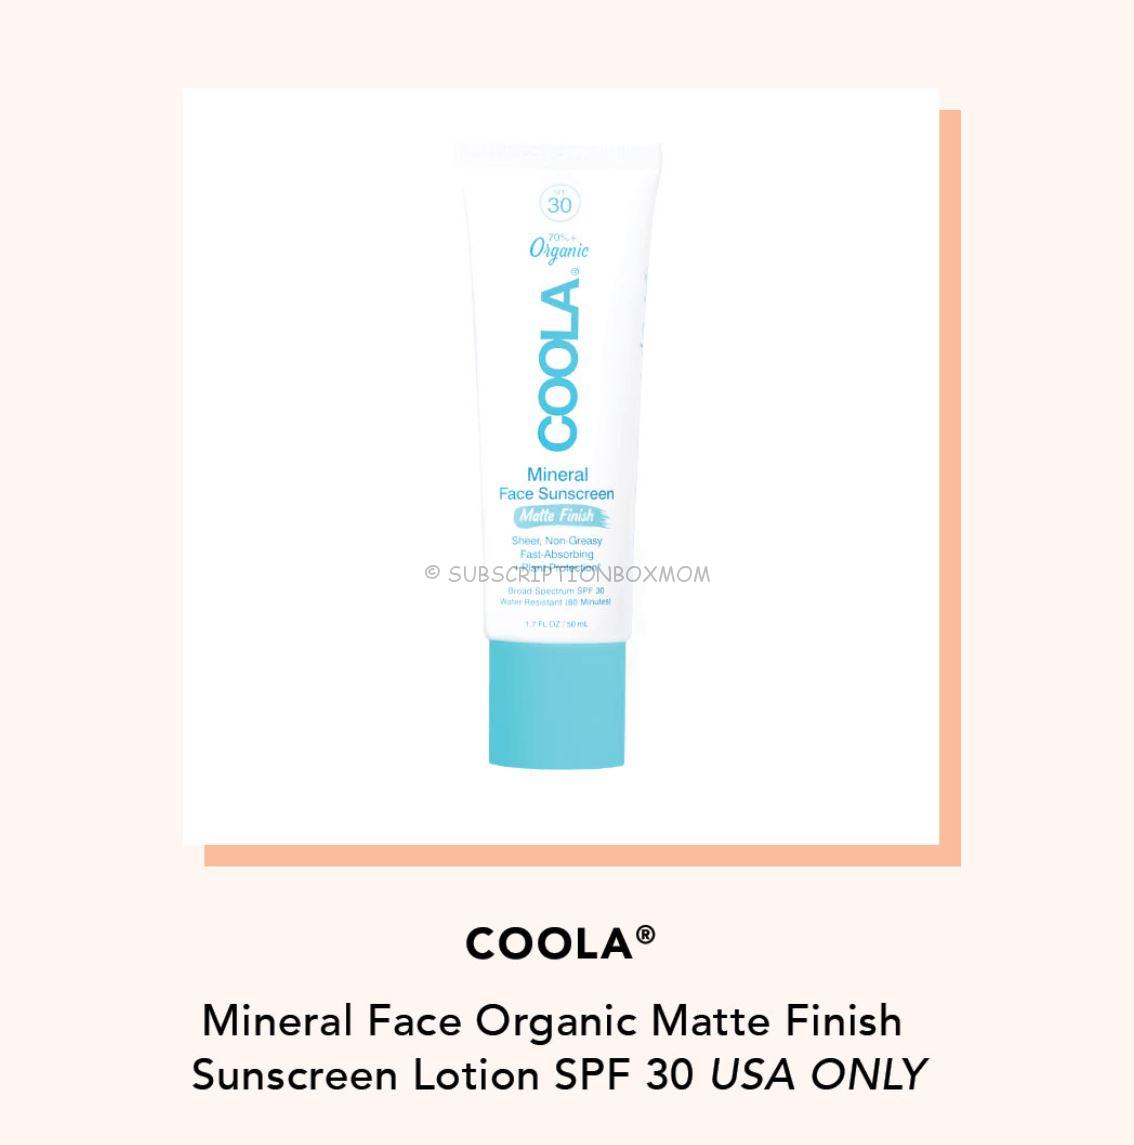 COOLA Mineral Face Organic Matte Finish Sunscreen Lotion SPF 30